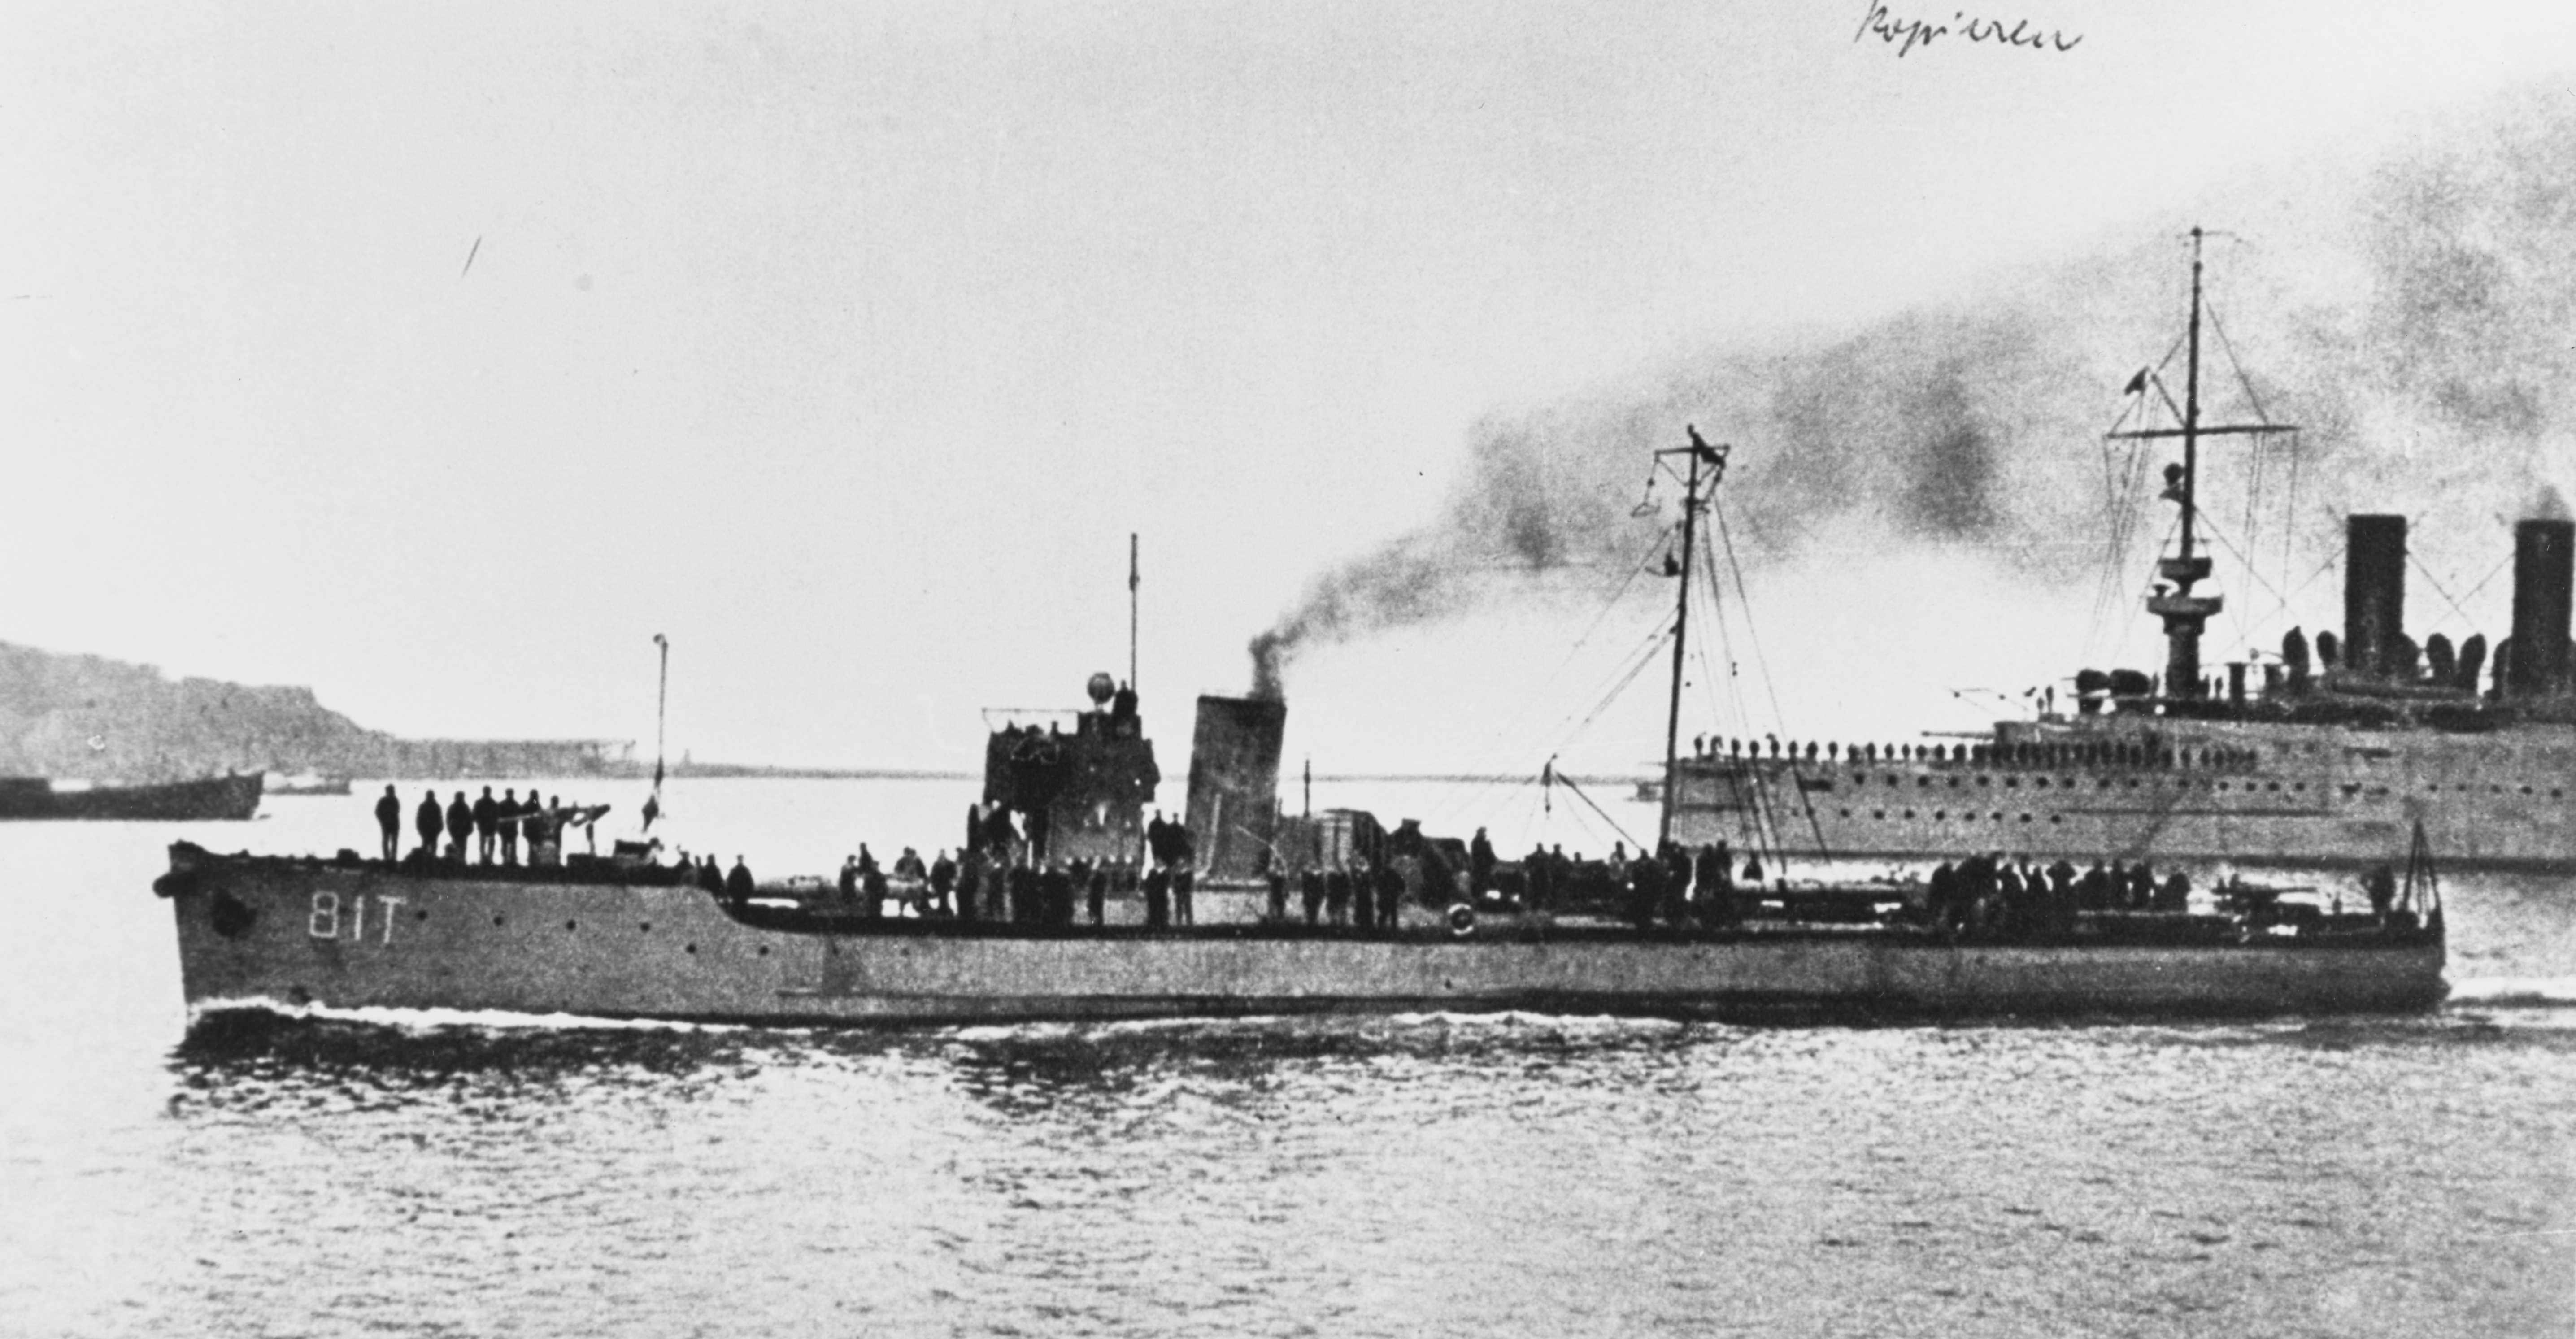 250t-class Austro-Hungarian torpedo boat 81T 